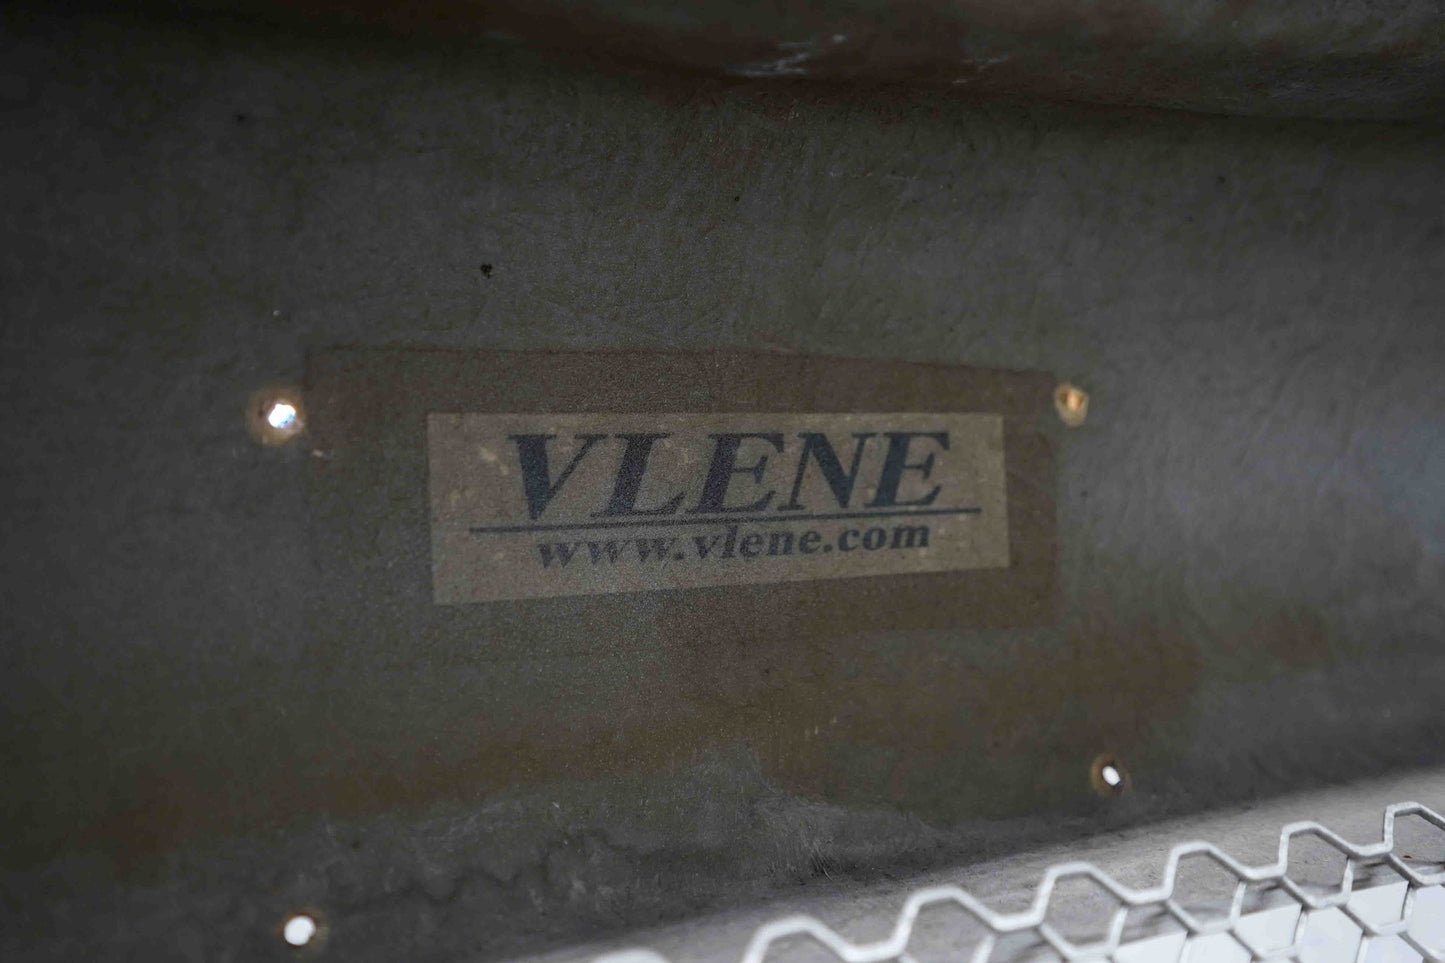 Vlene Existence Premium Front Bumper (FACELIFT LS430 UCF30/31)